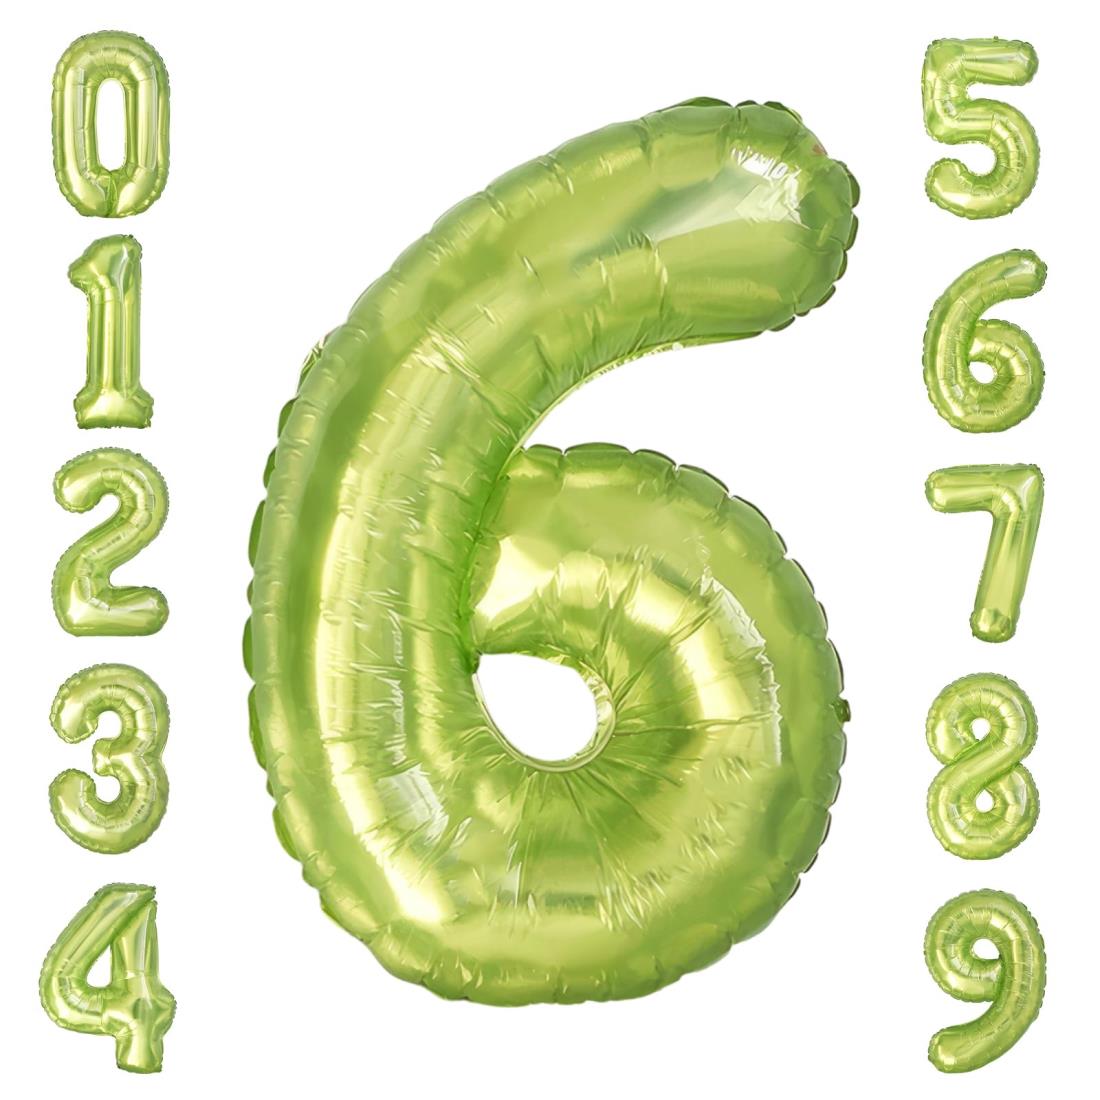 GRESATEK バルーン 数字 風船 誕生日 緑色 40インチ 大きい ナンバー6 バースデーバルーン 飾り付け 結婚式 パーティー 記念日 ウェディング クリスタル ゼリー クリスタル グリーン 6